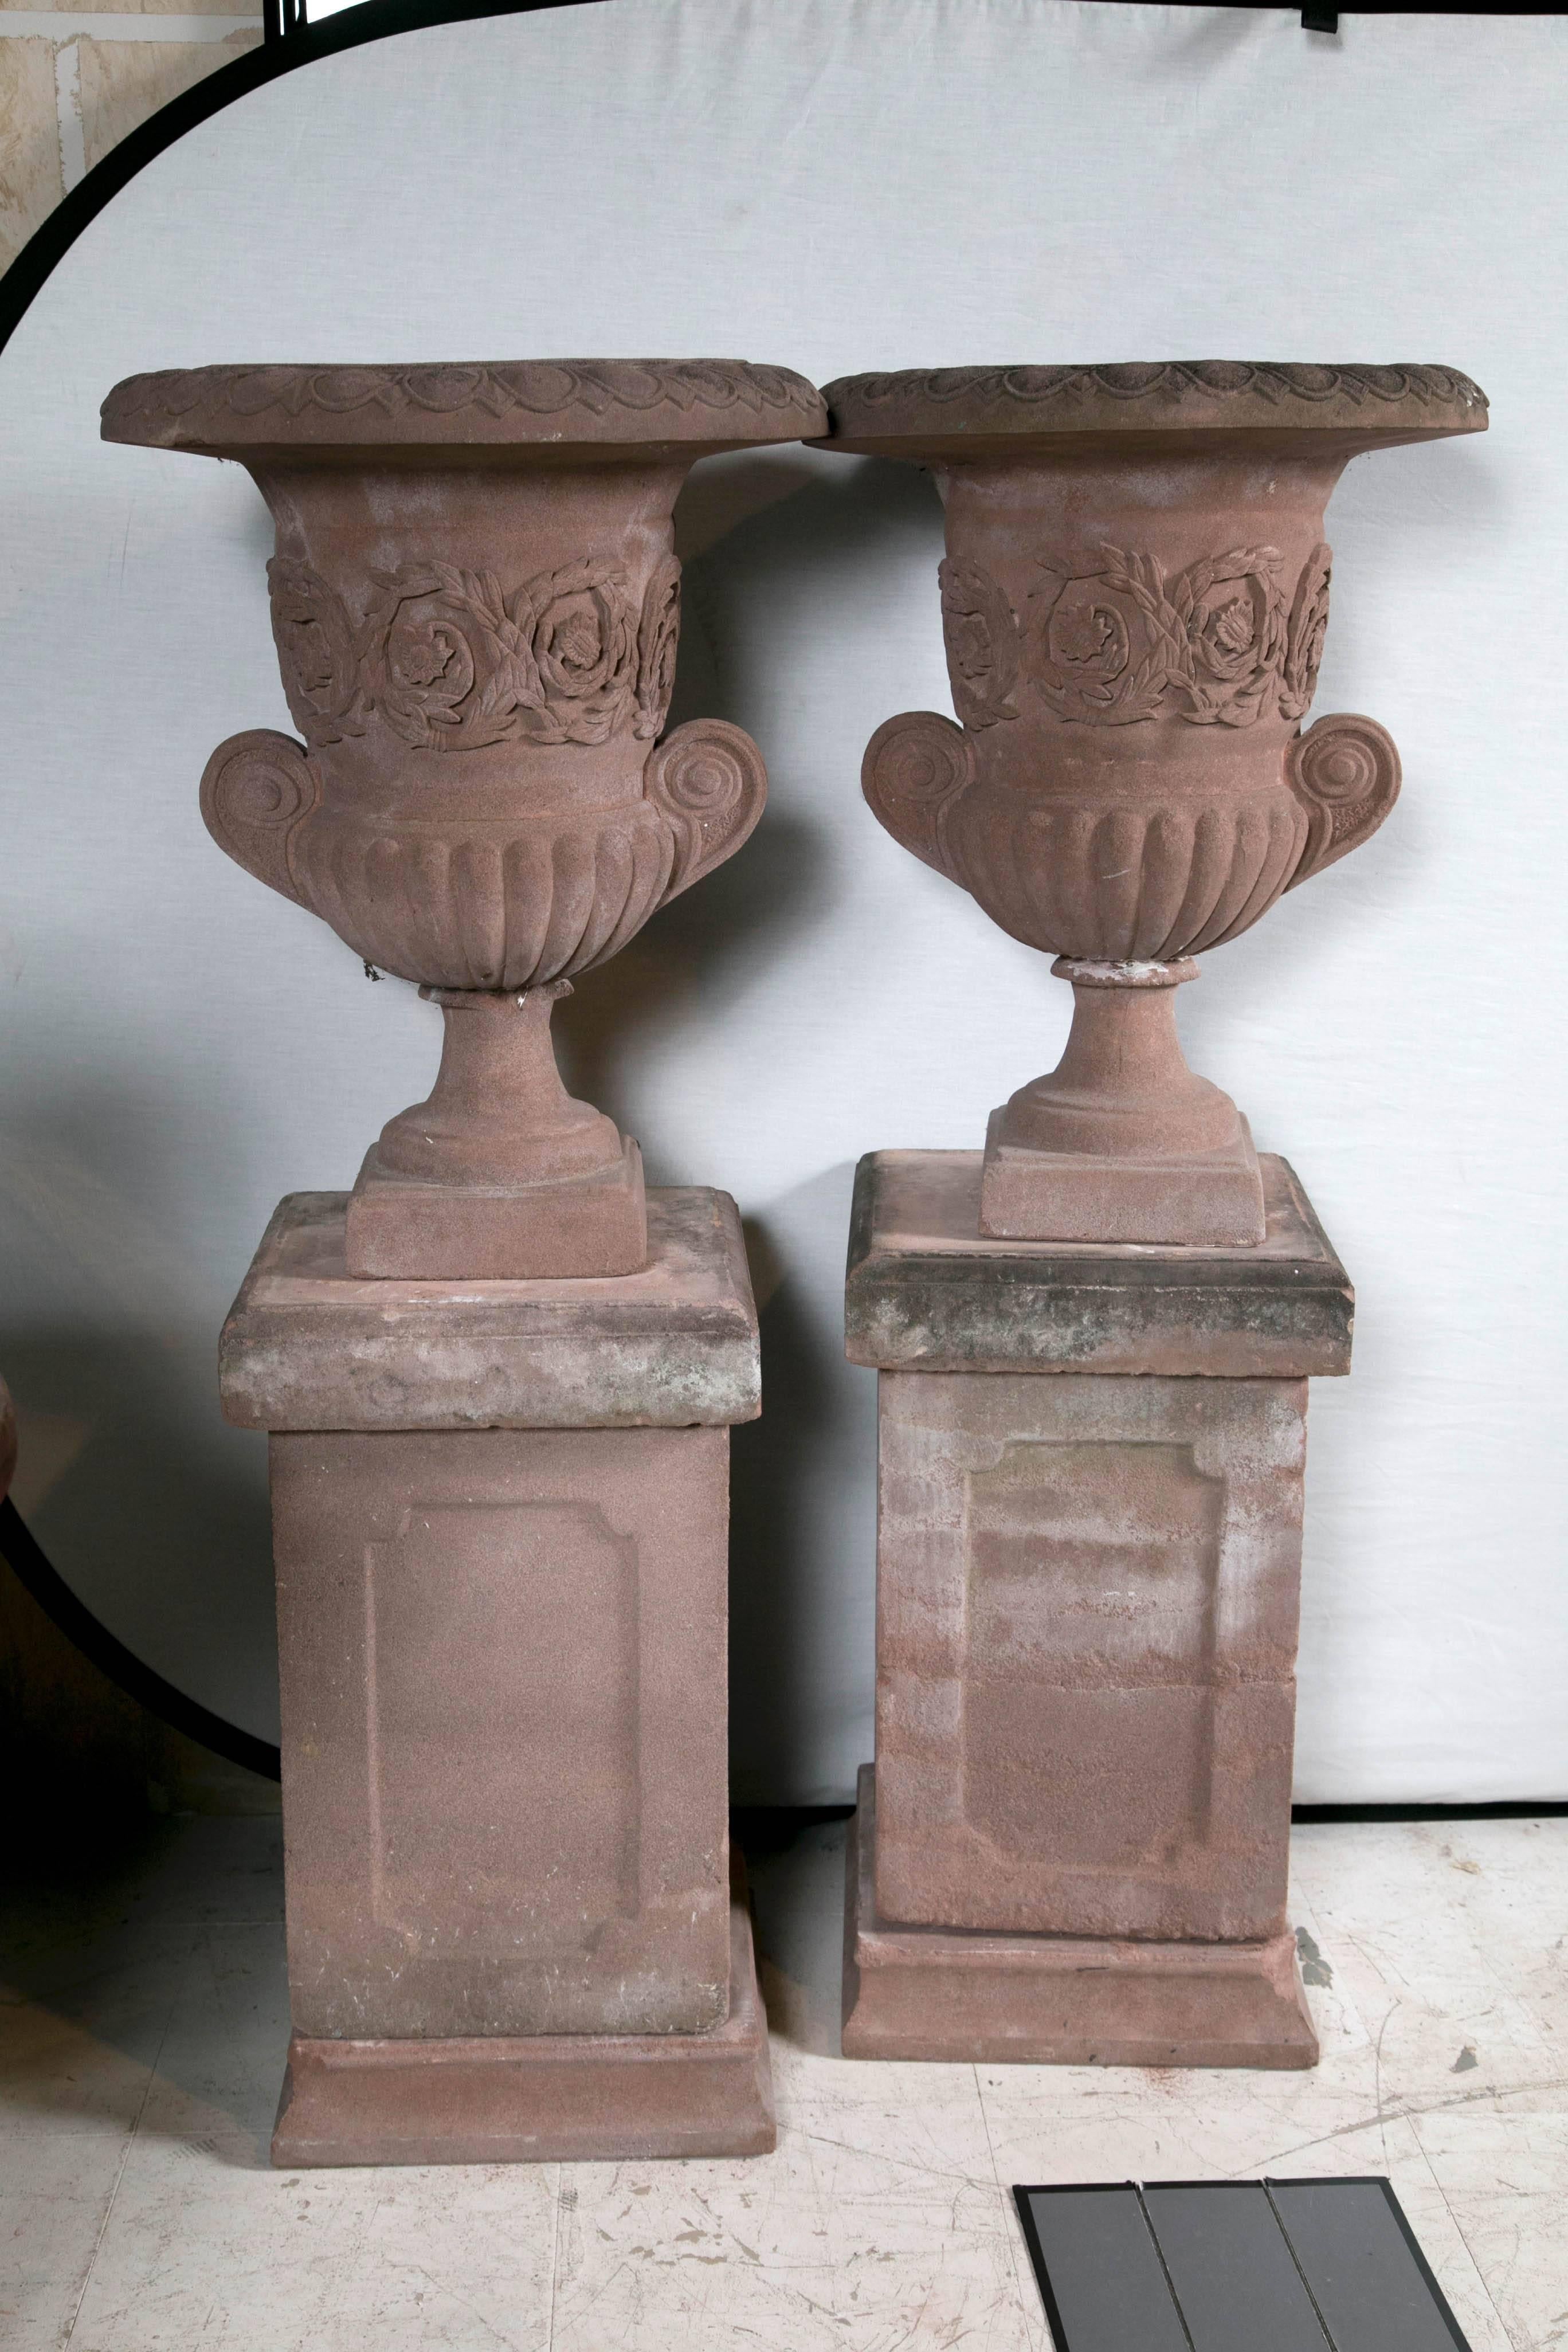 Lovely pair of English terra cotta garden urns on matching plinths.